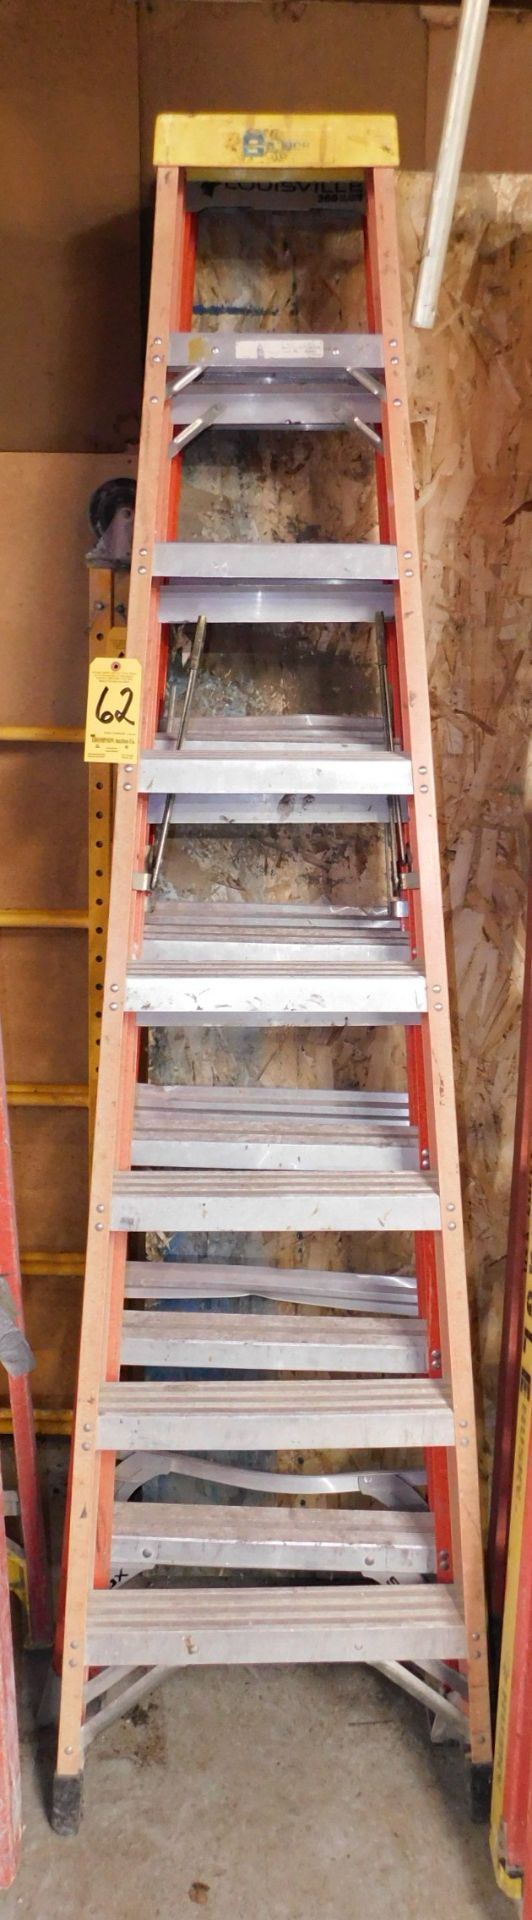 Fiberglass Step Ladder, 8 Ft., Pataskala Location